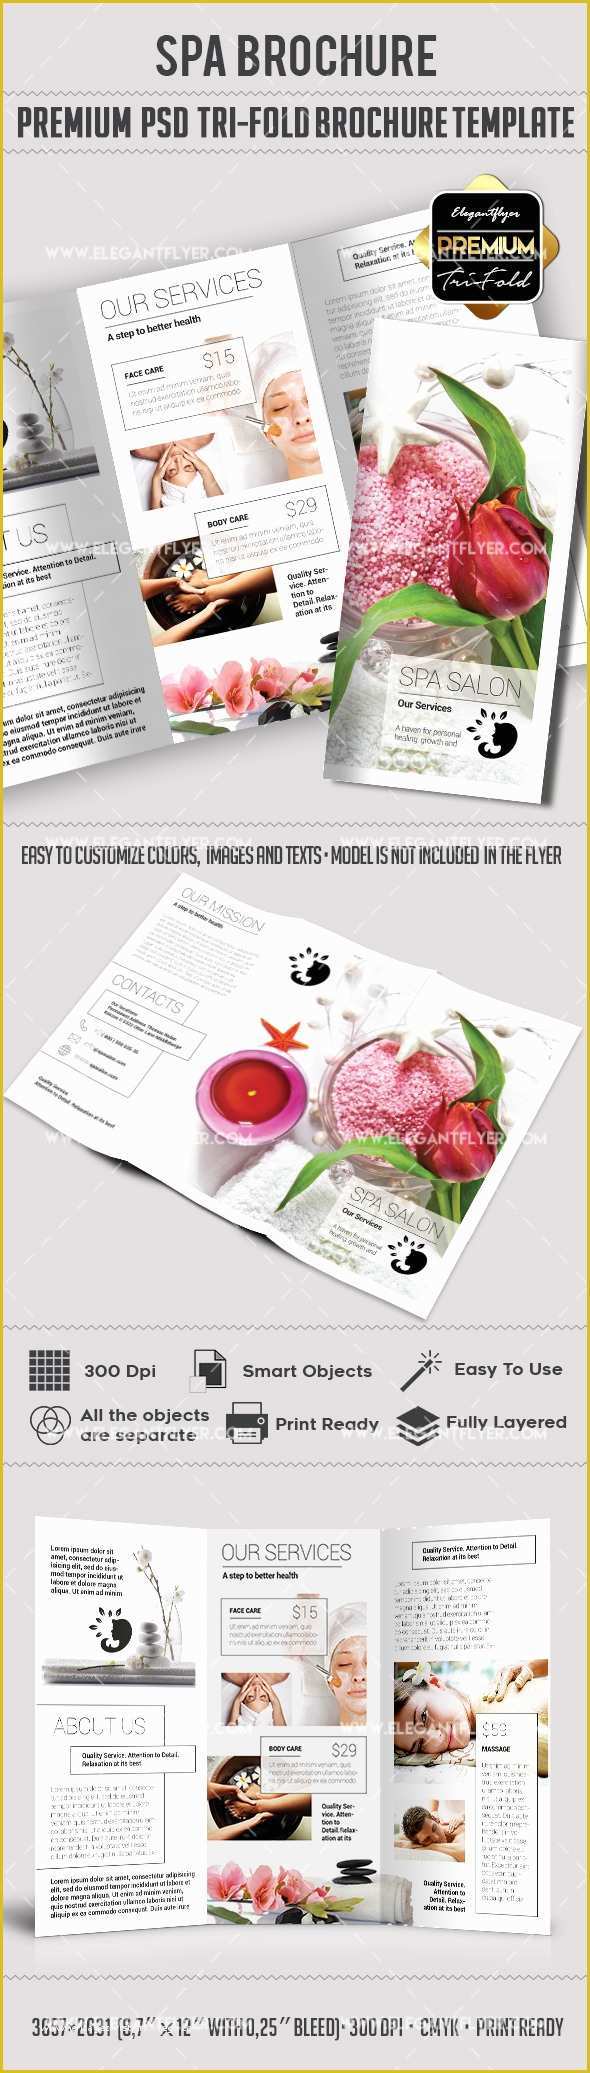 Tri Fold Brochure Template Psd Free Download Of Tri Fold Brochure for Spa Salon Template – by Elegantflyer